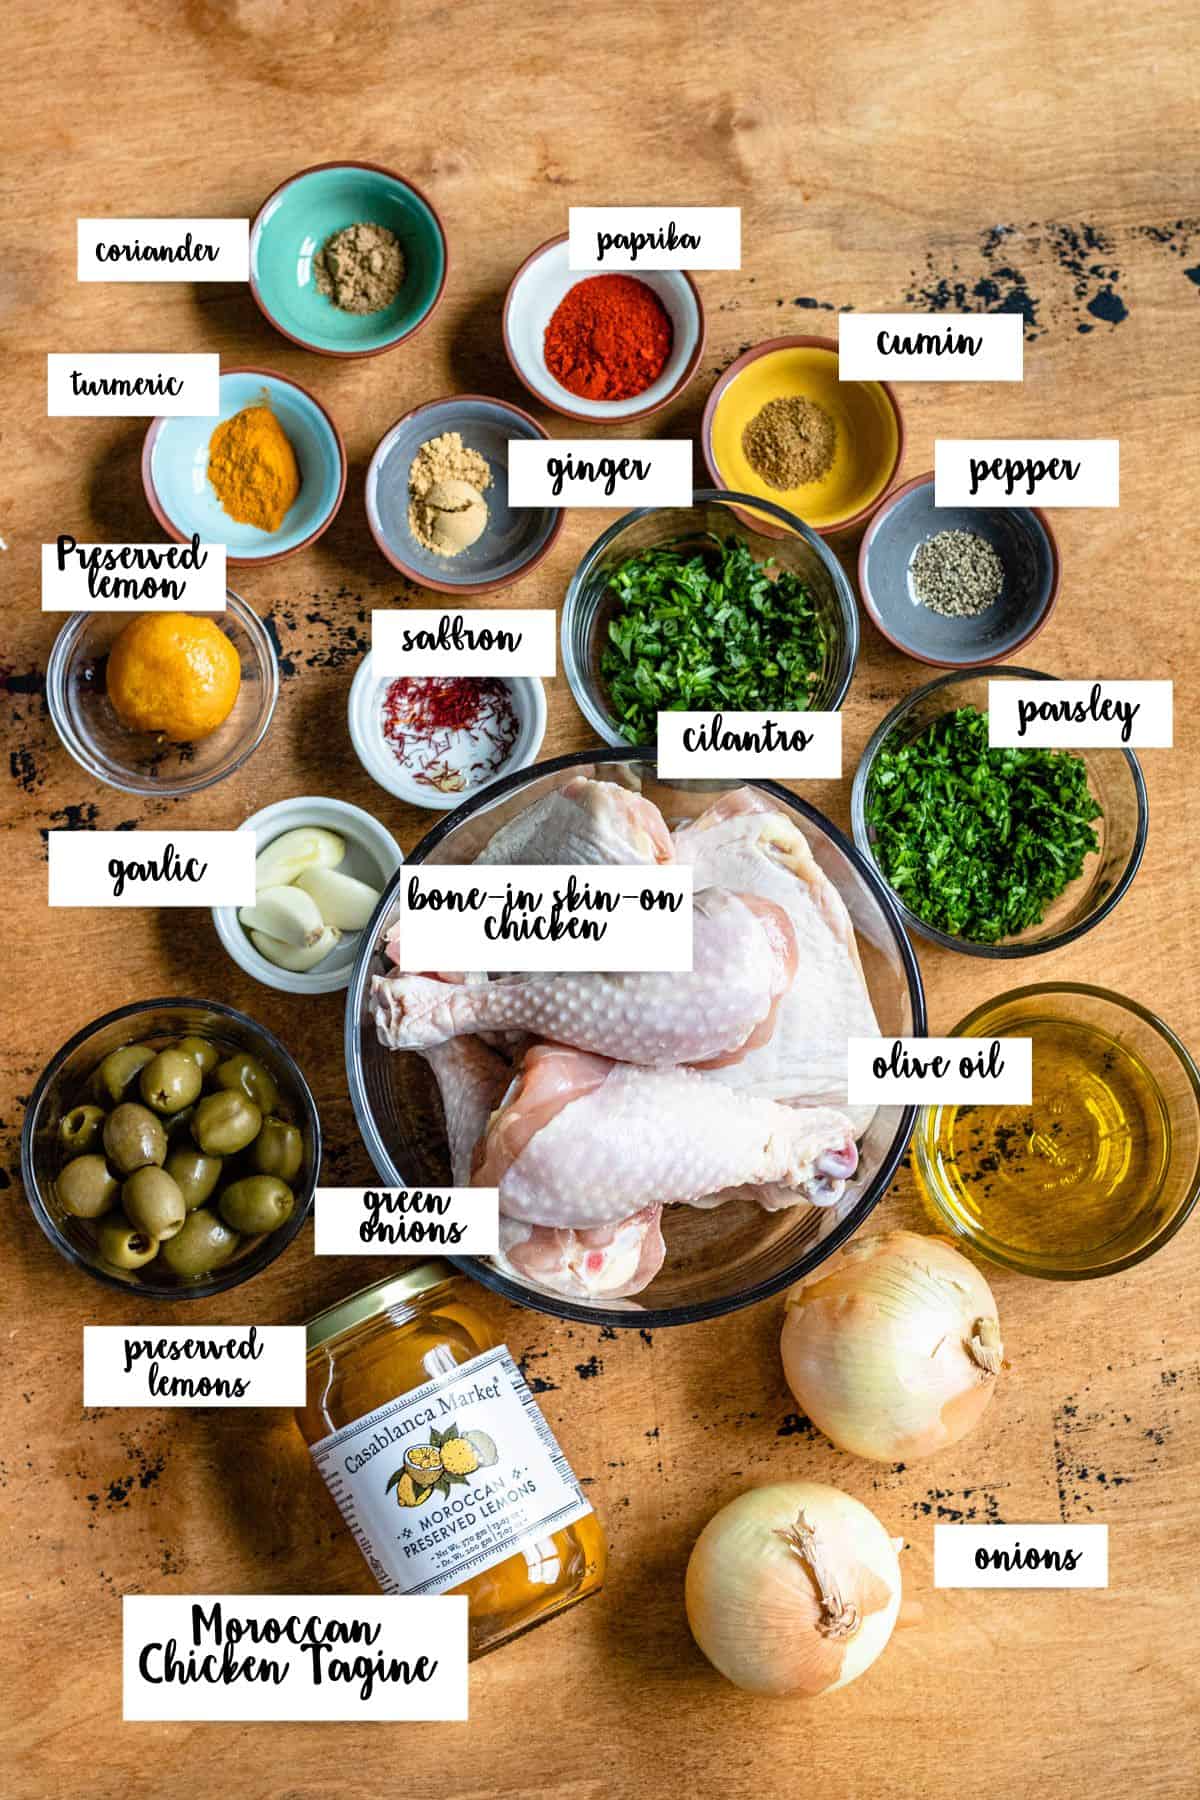 Ingredients shown are used to prepare Moroccan chicken tagine recipe. 